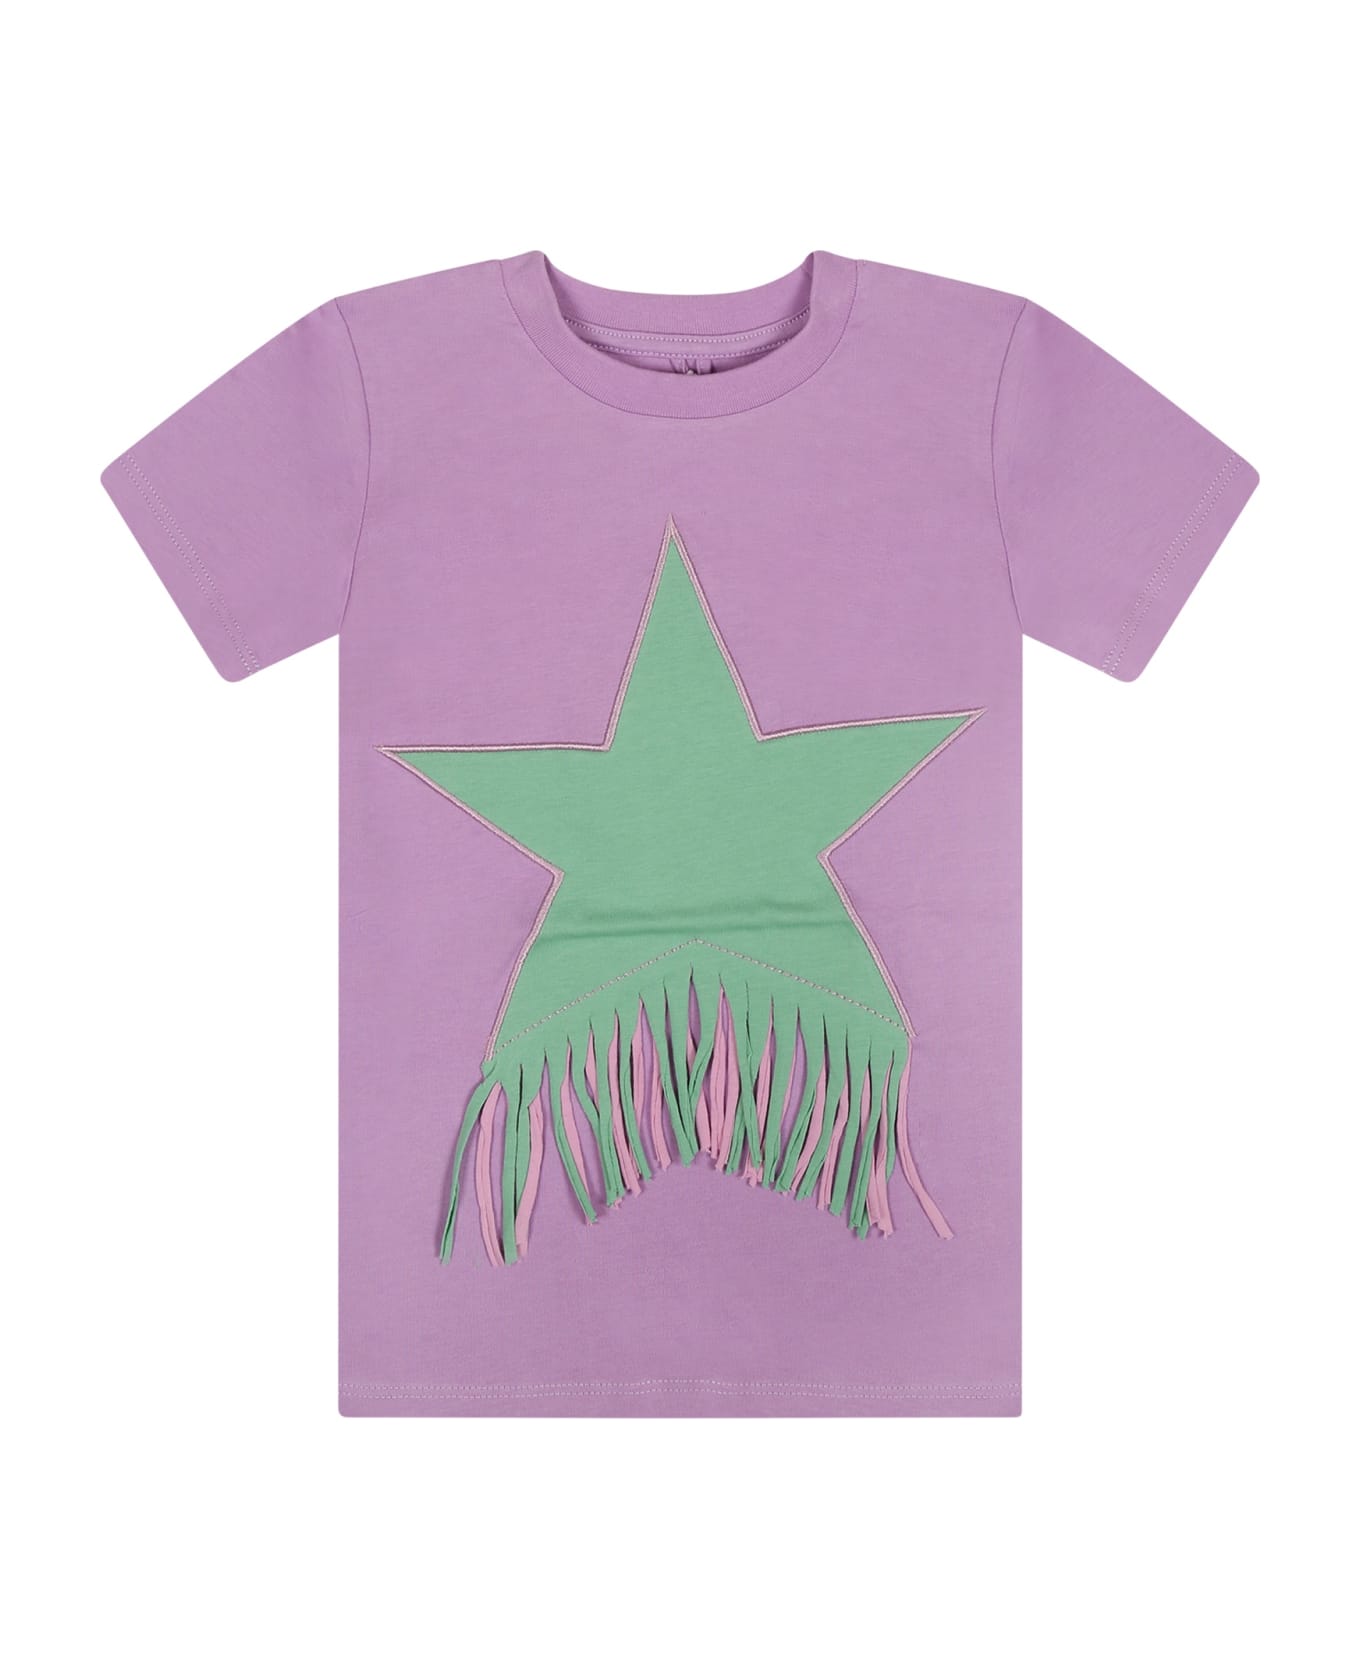 Stella McCartney Kids Purple Dress For Baby Girl With Star - Violet ジャンプスーツ